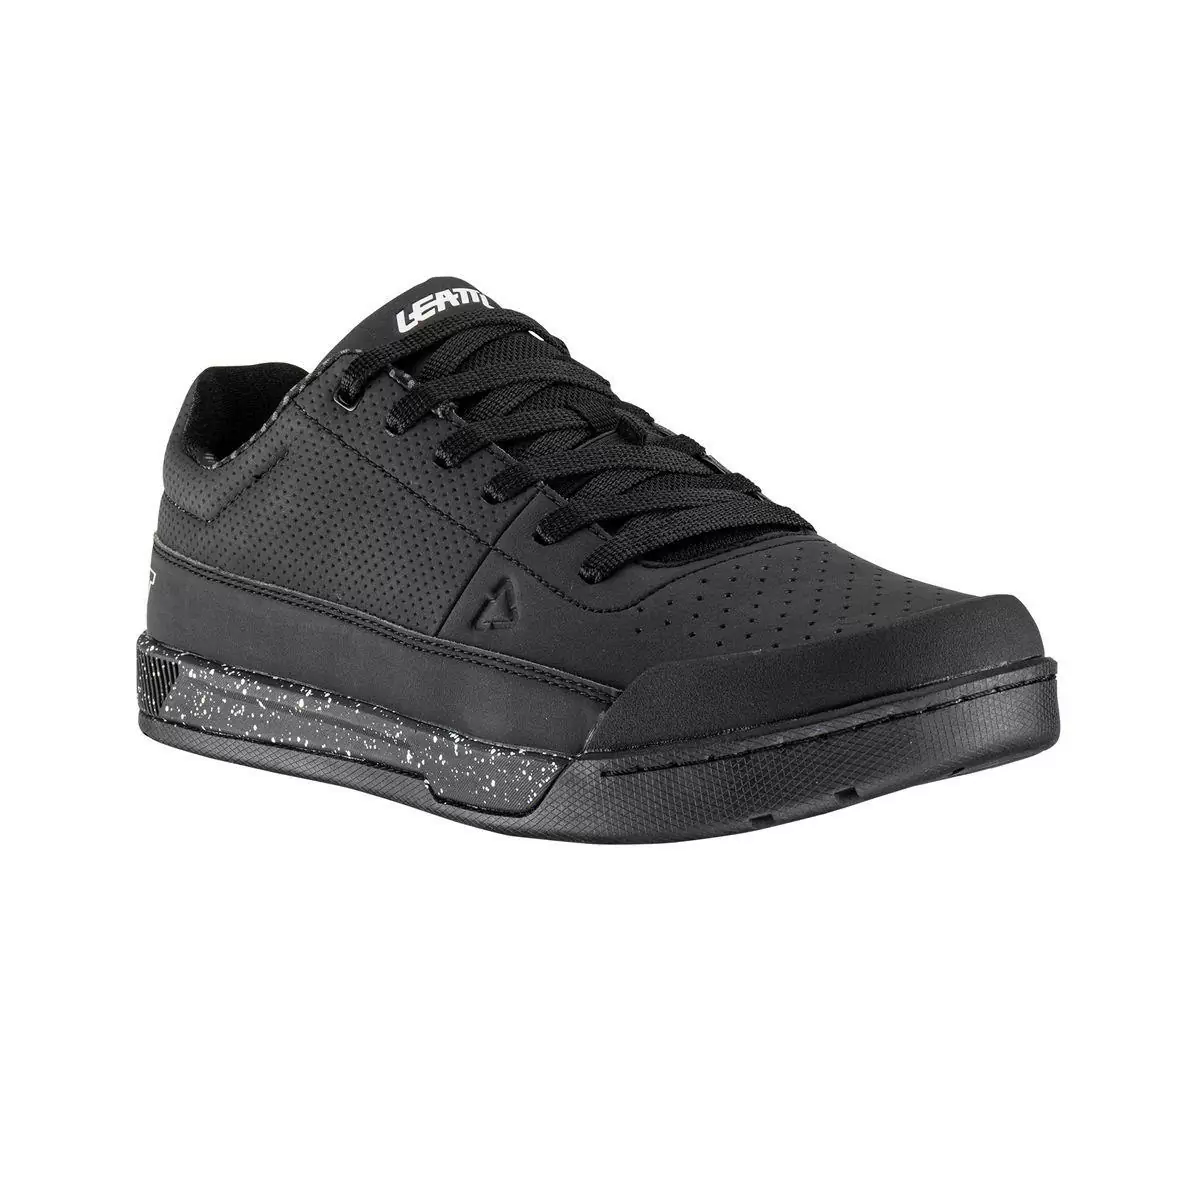 Mtb Shoes 2.0 Flat Black Size 43 #1